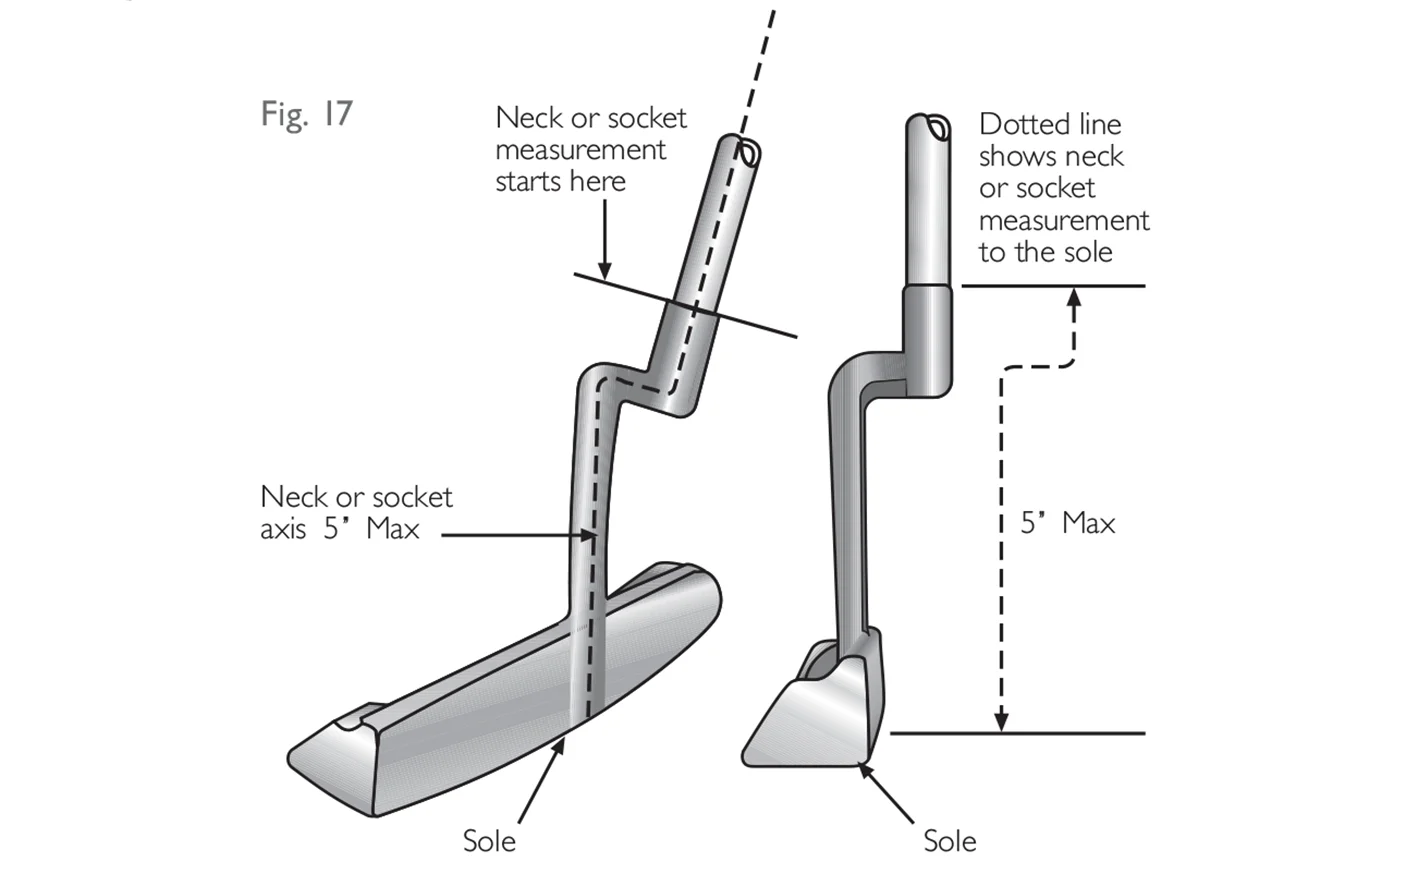 Fig 17:  Length of neck